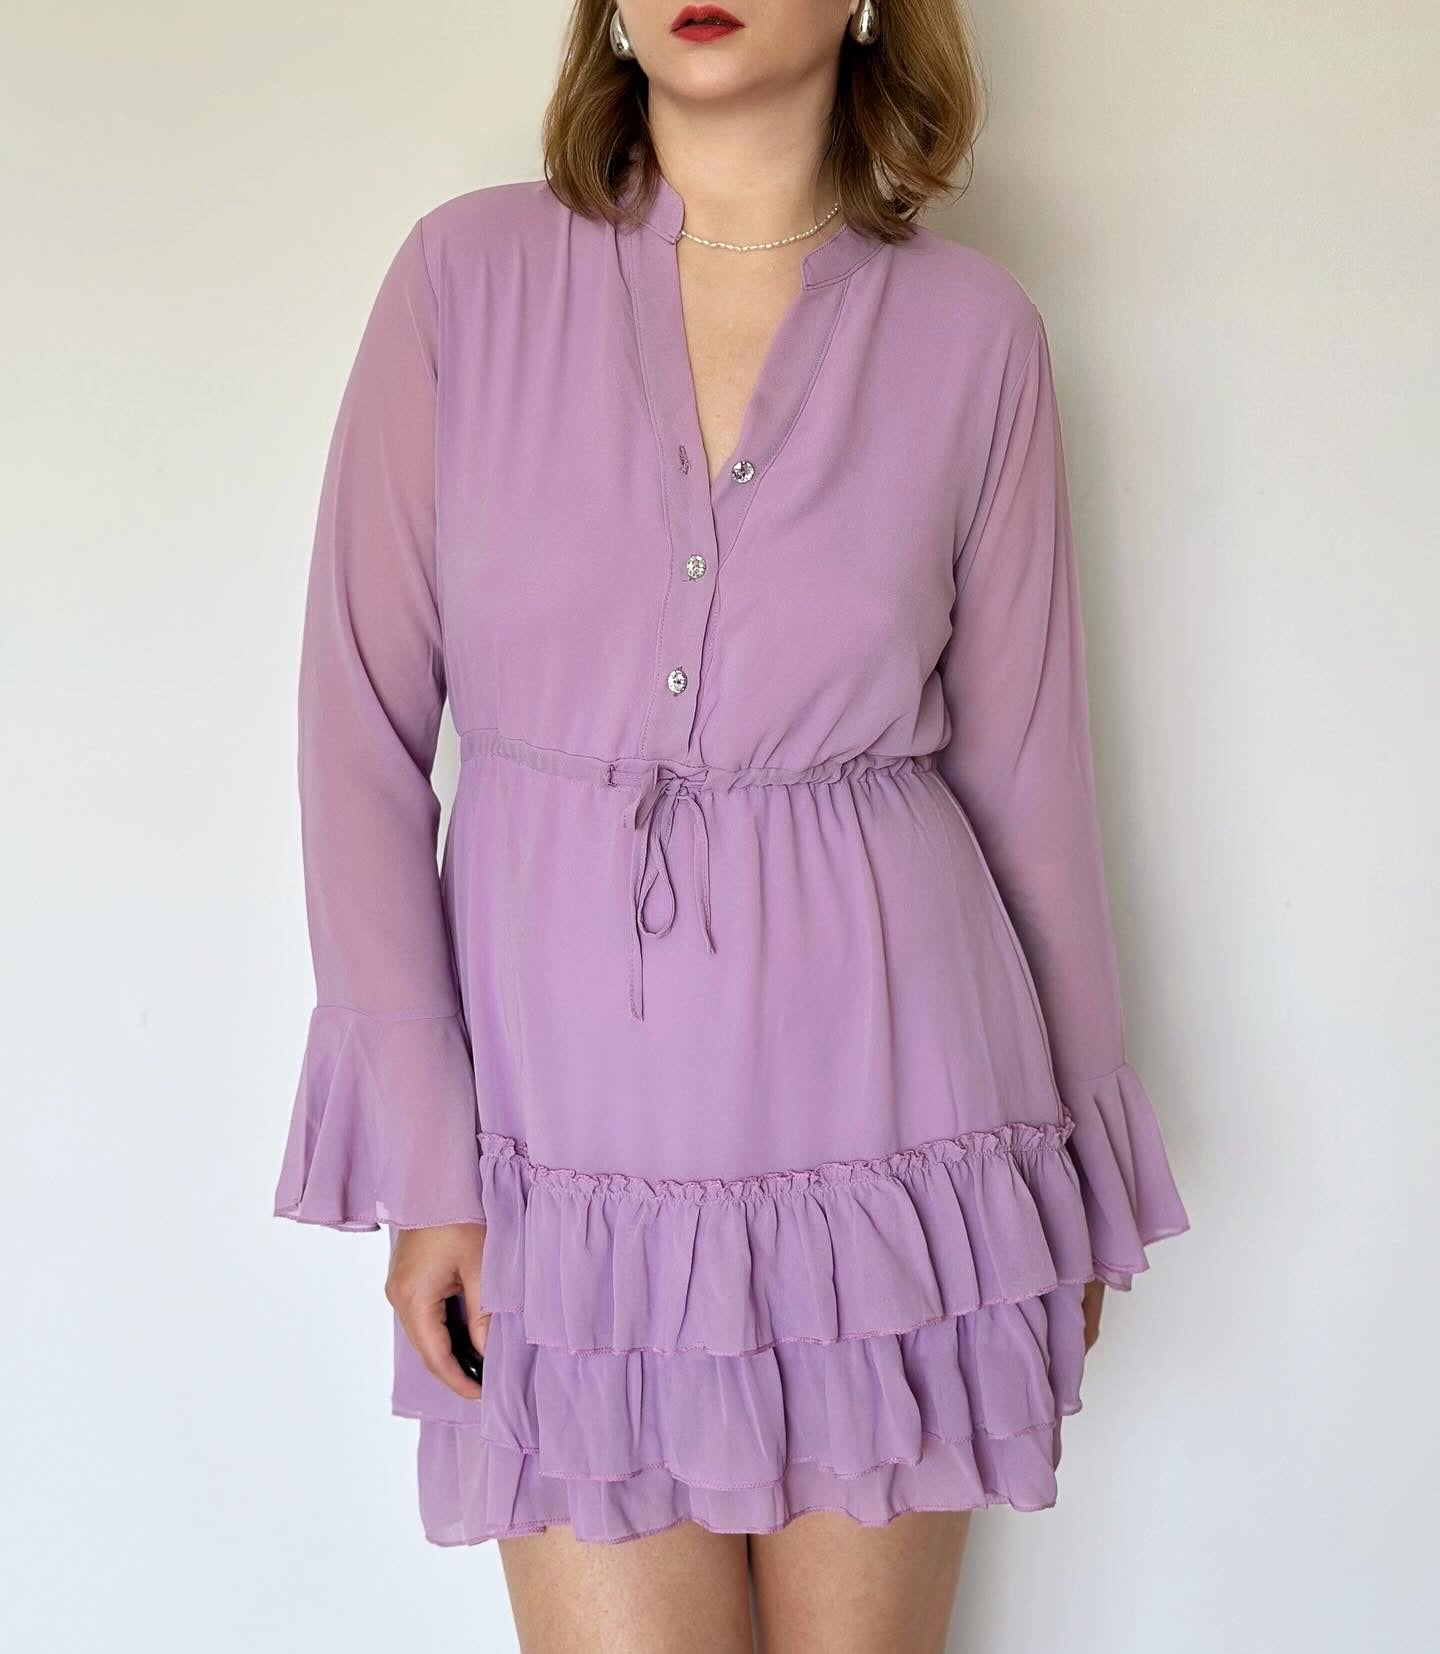 Romantic lilac mini dress with ruffles